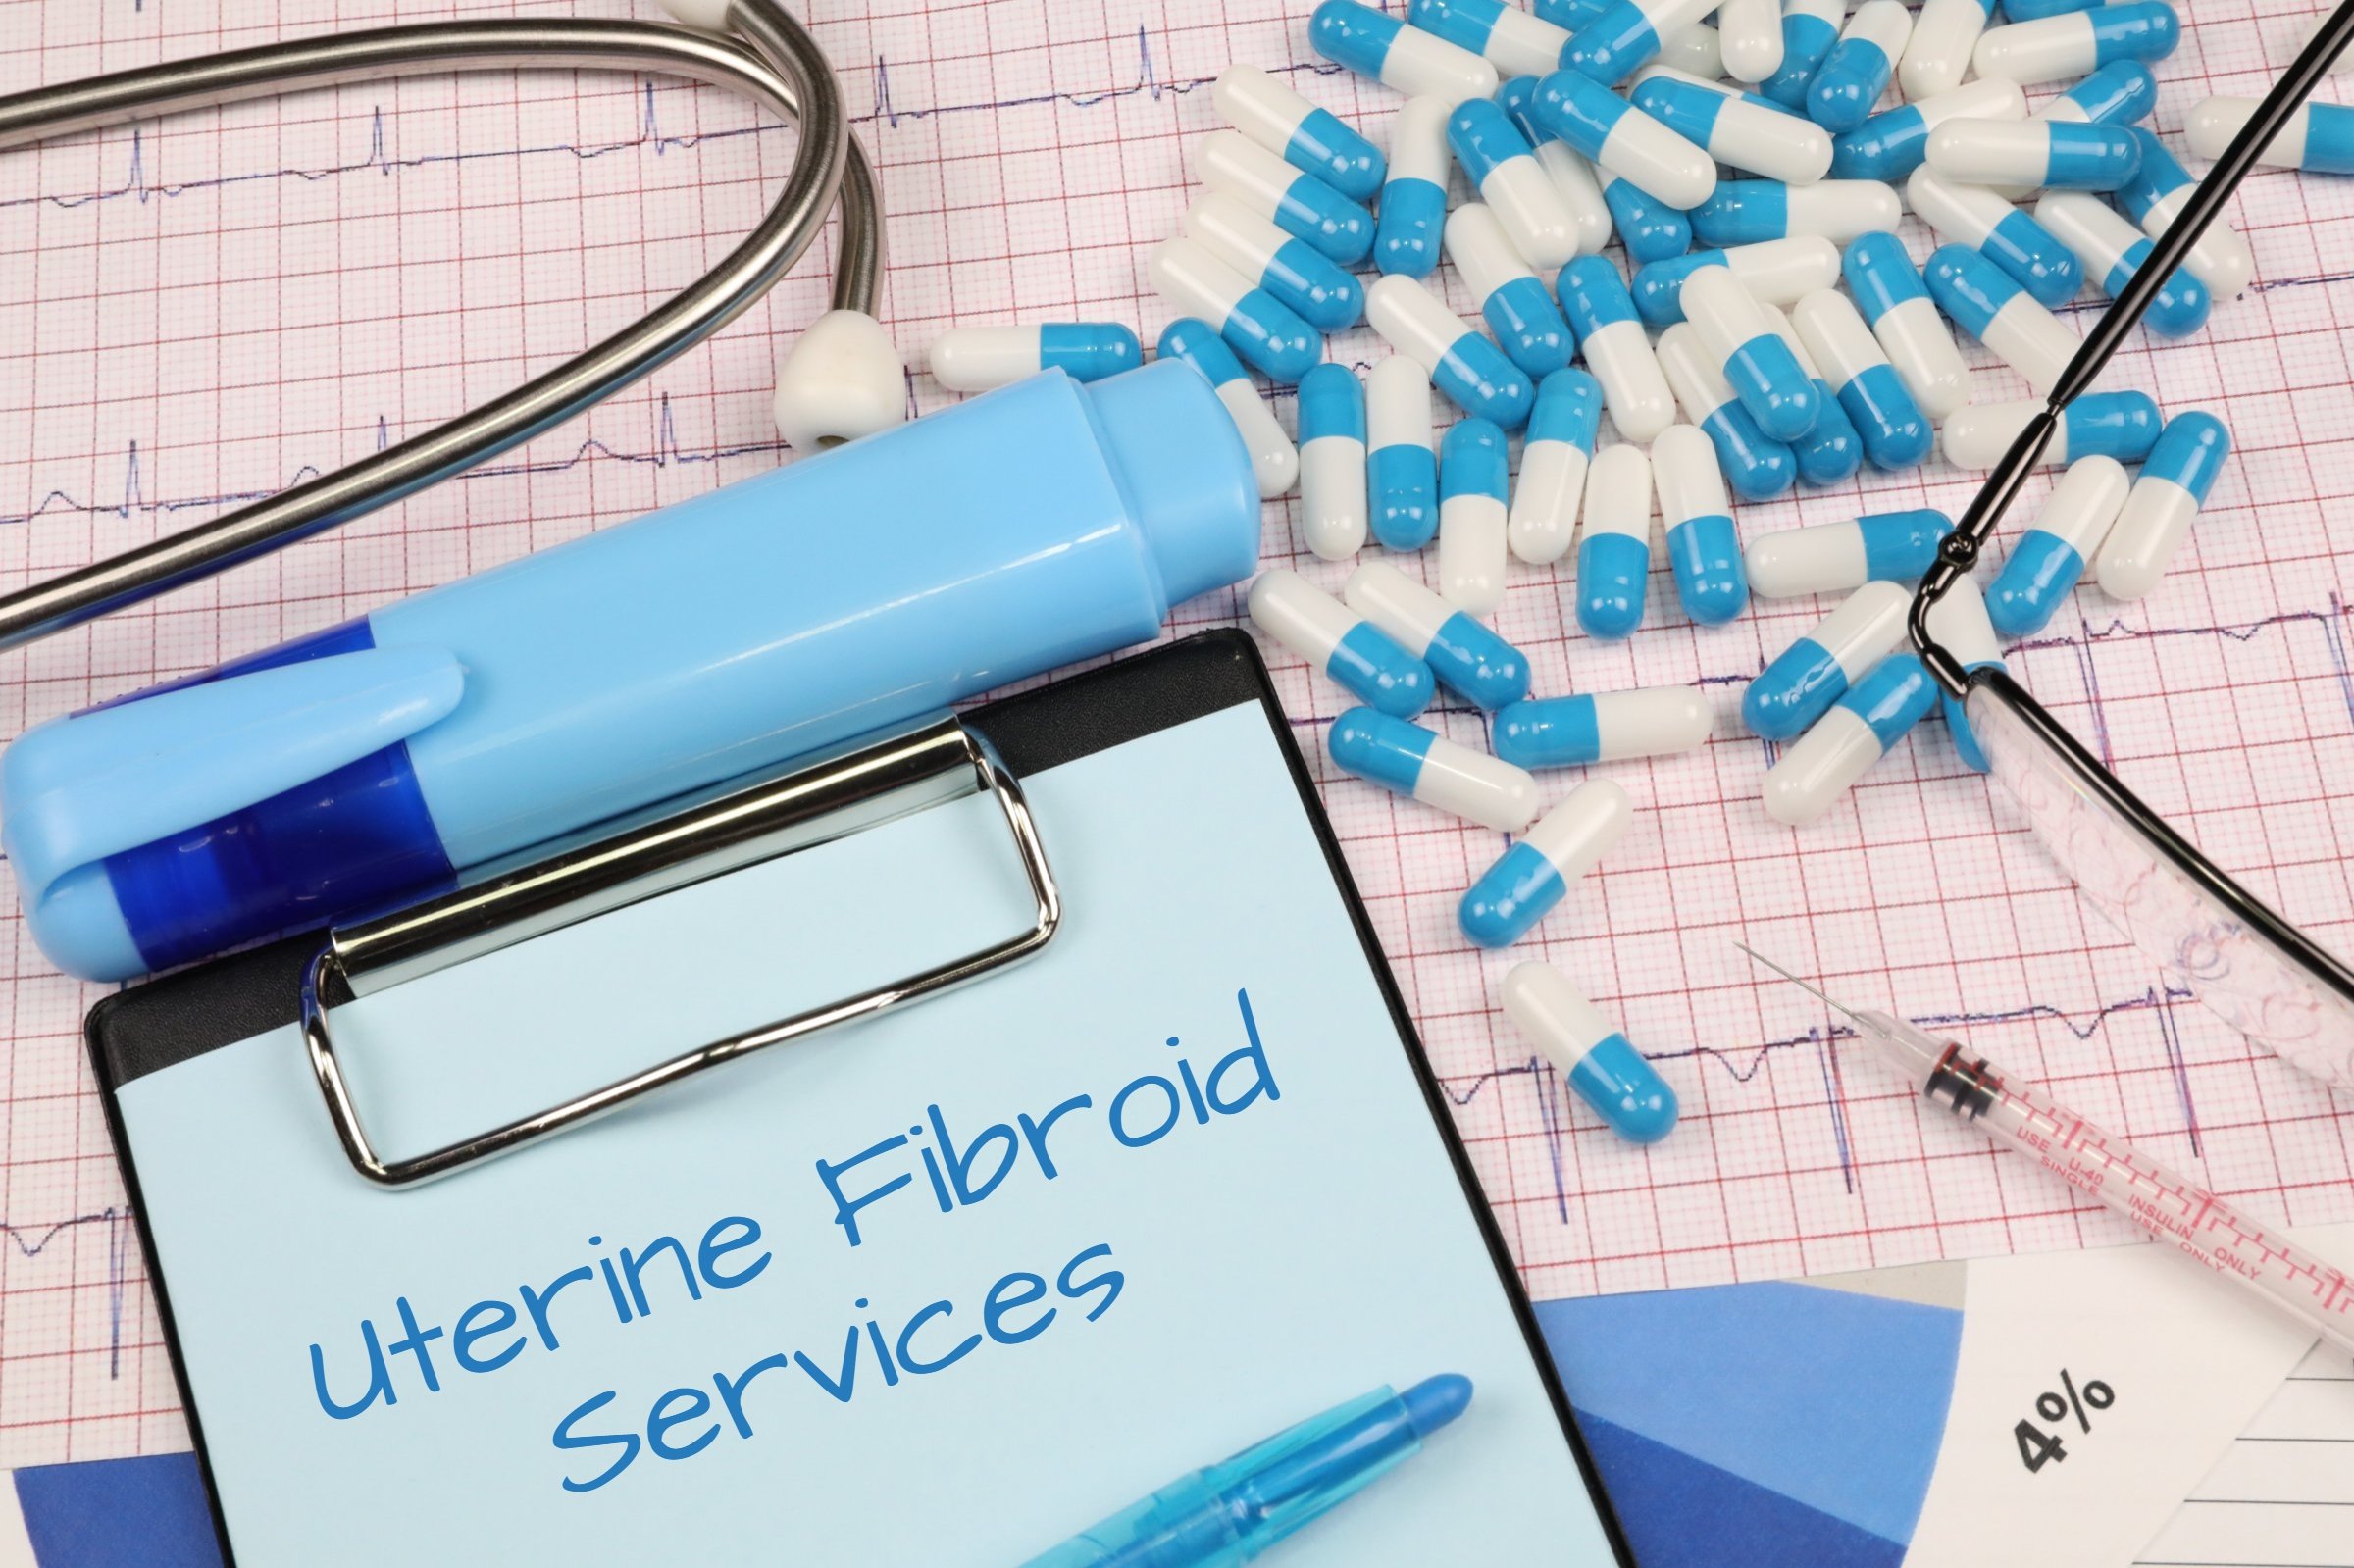 uterine fibroid services